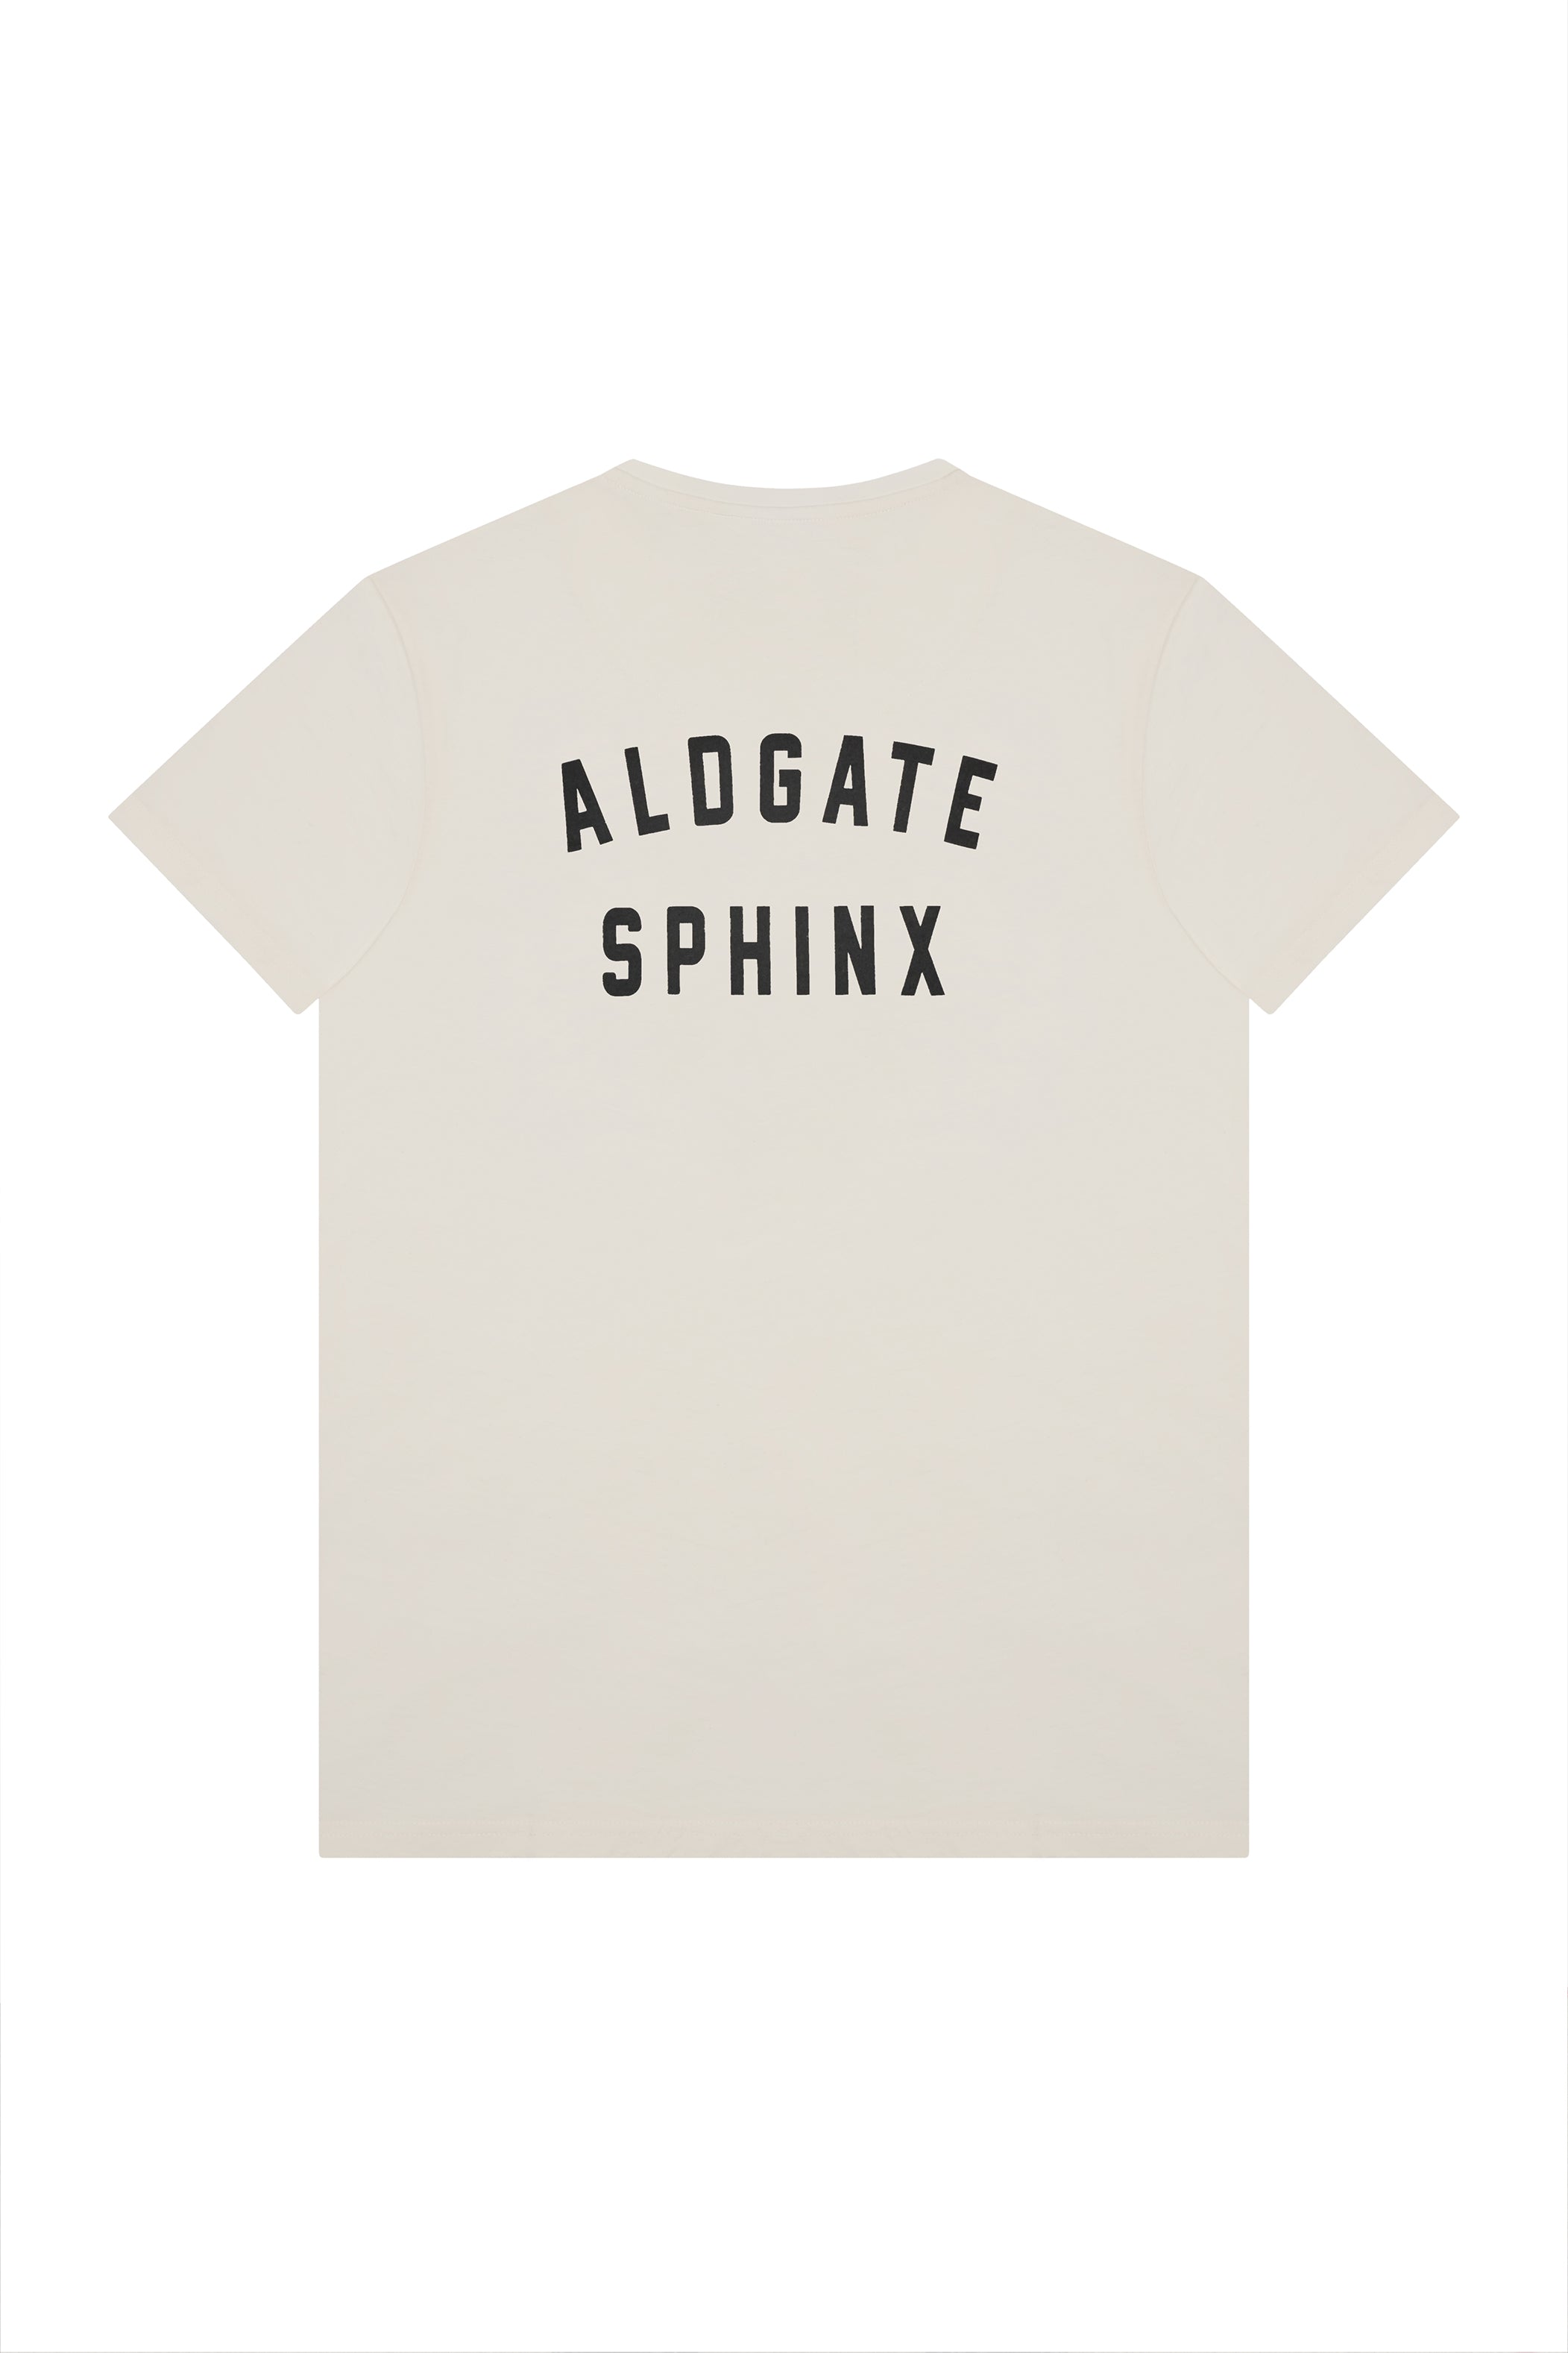 ALDGATE SPHINX LIGHT-WEIGHT T-SHIRT